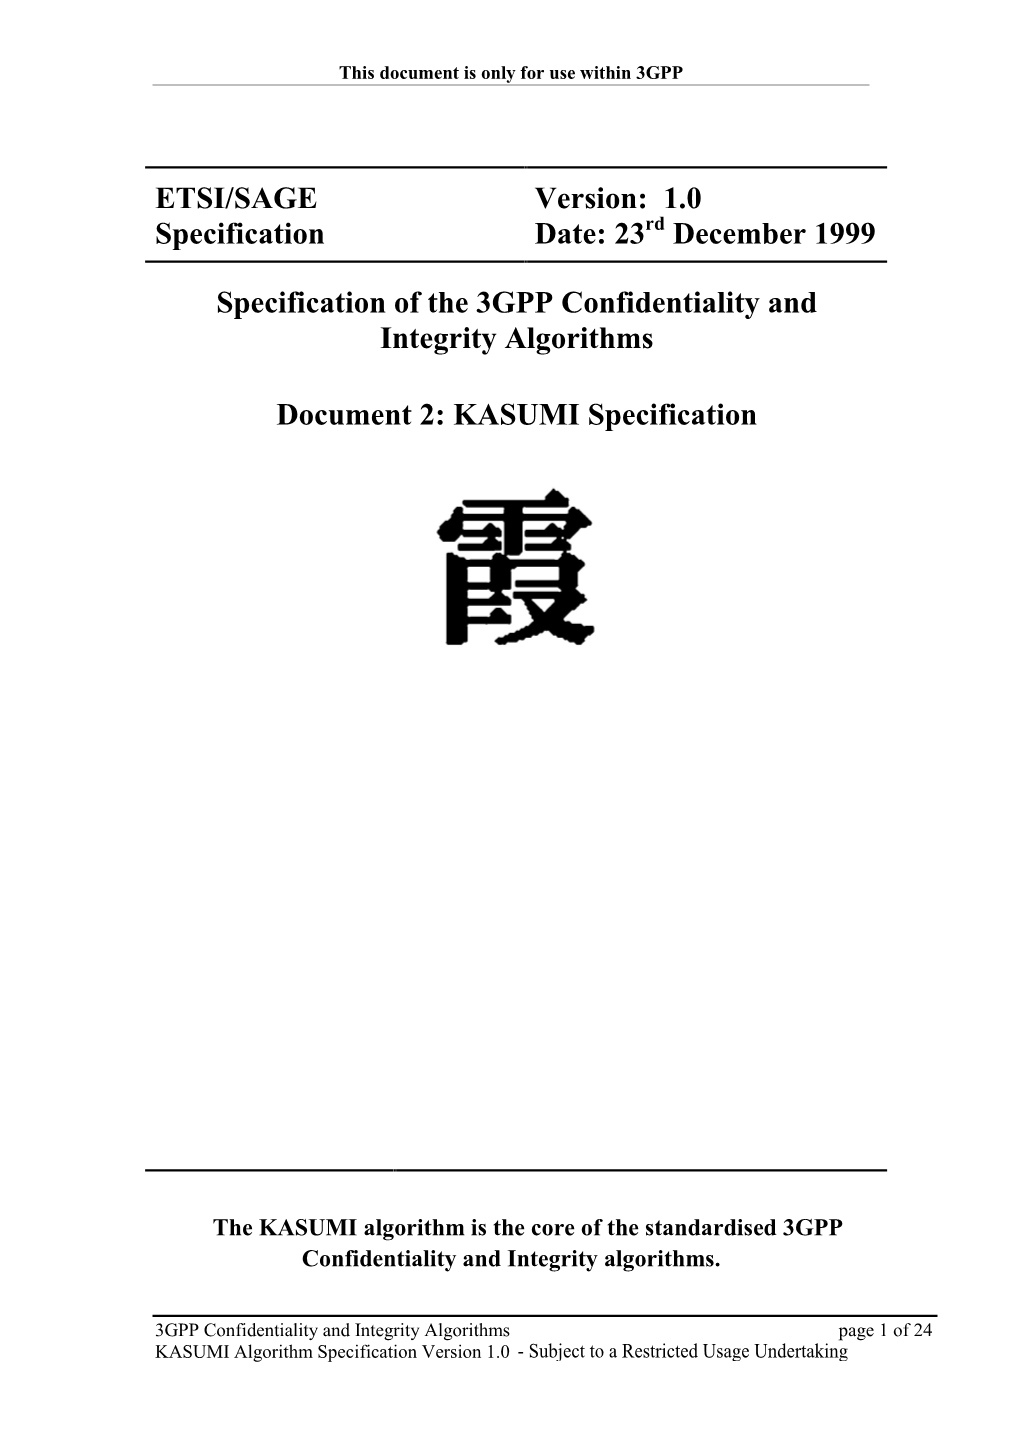 KASUMI Specification